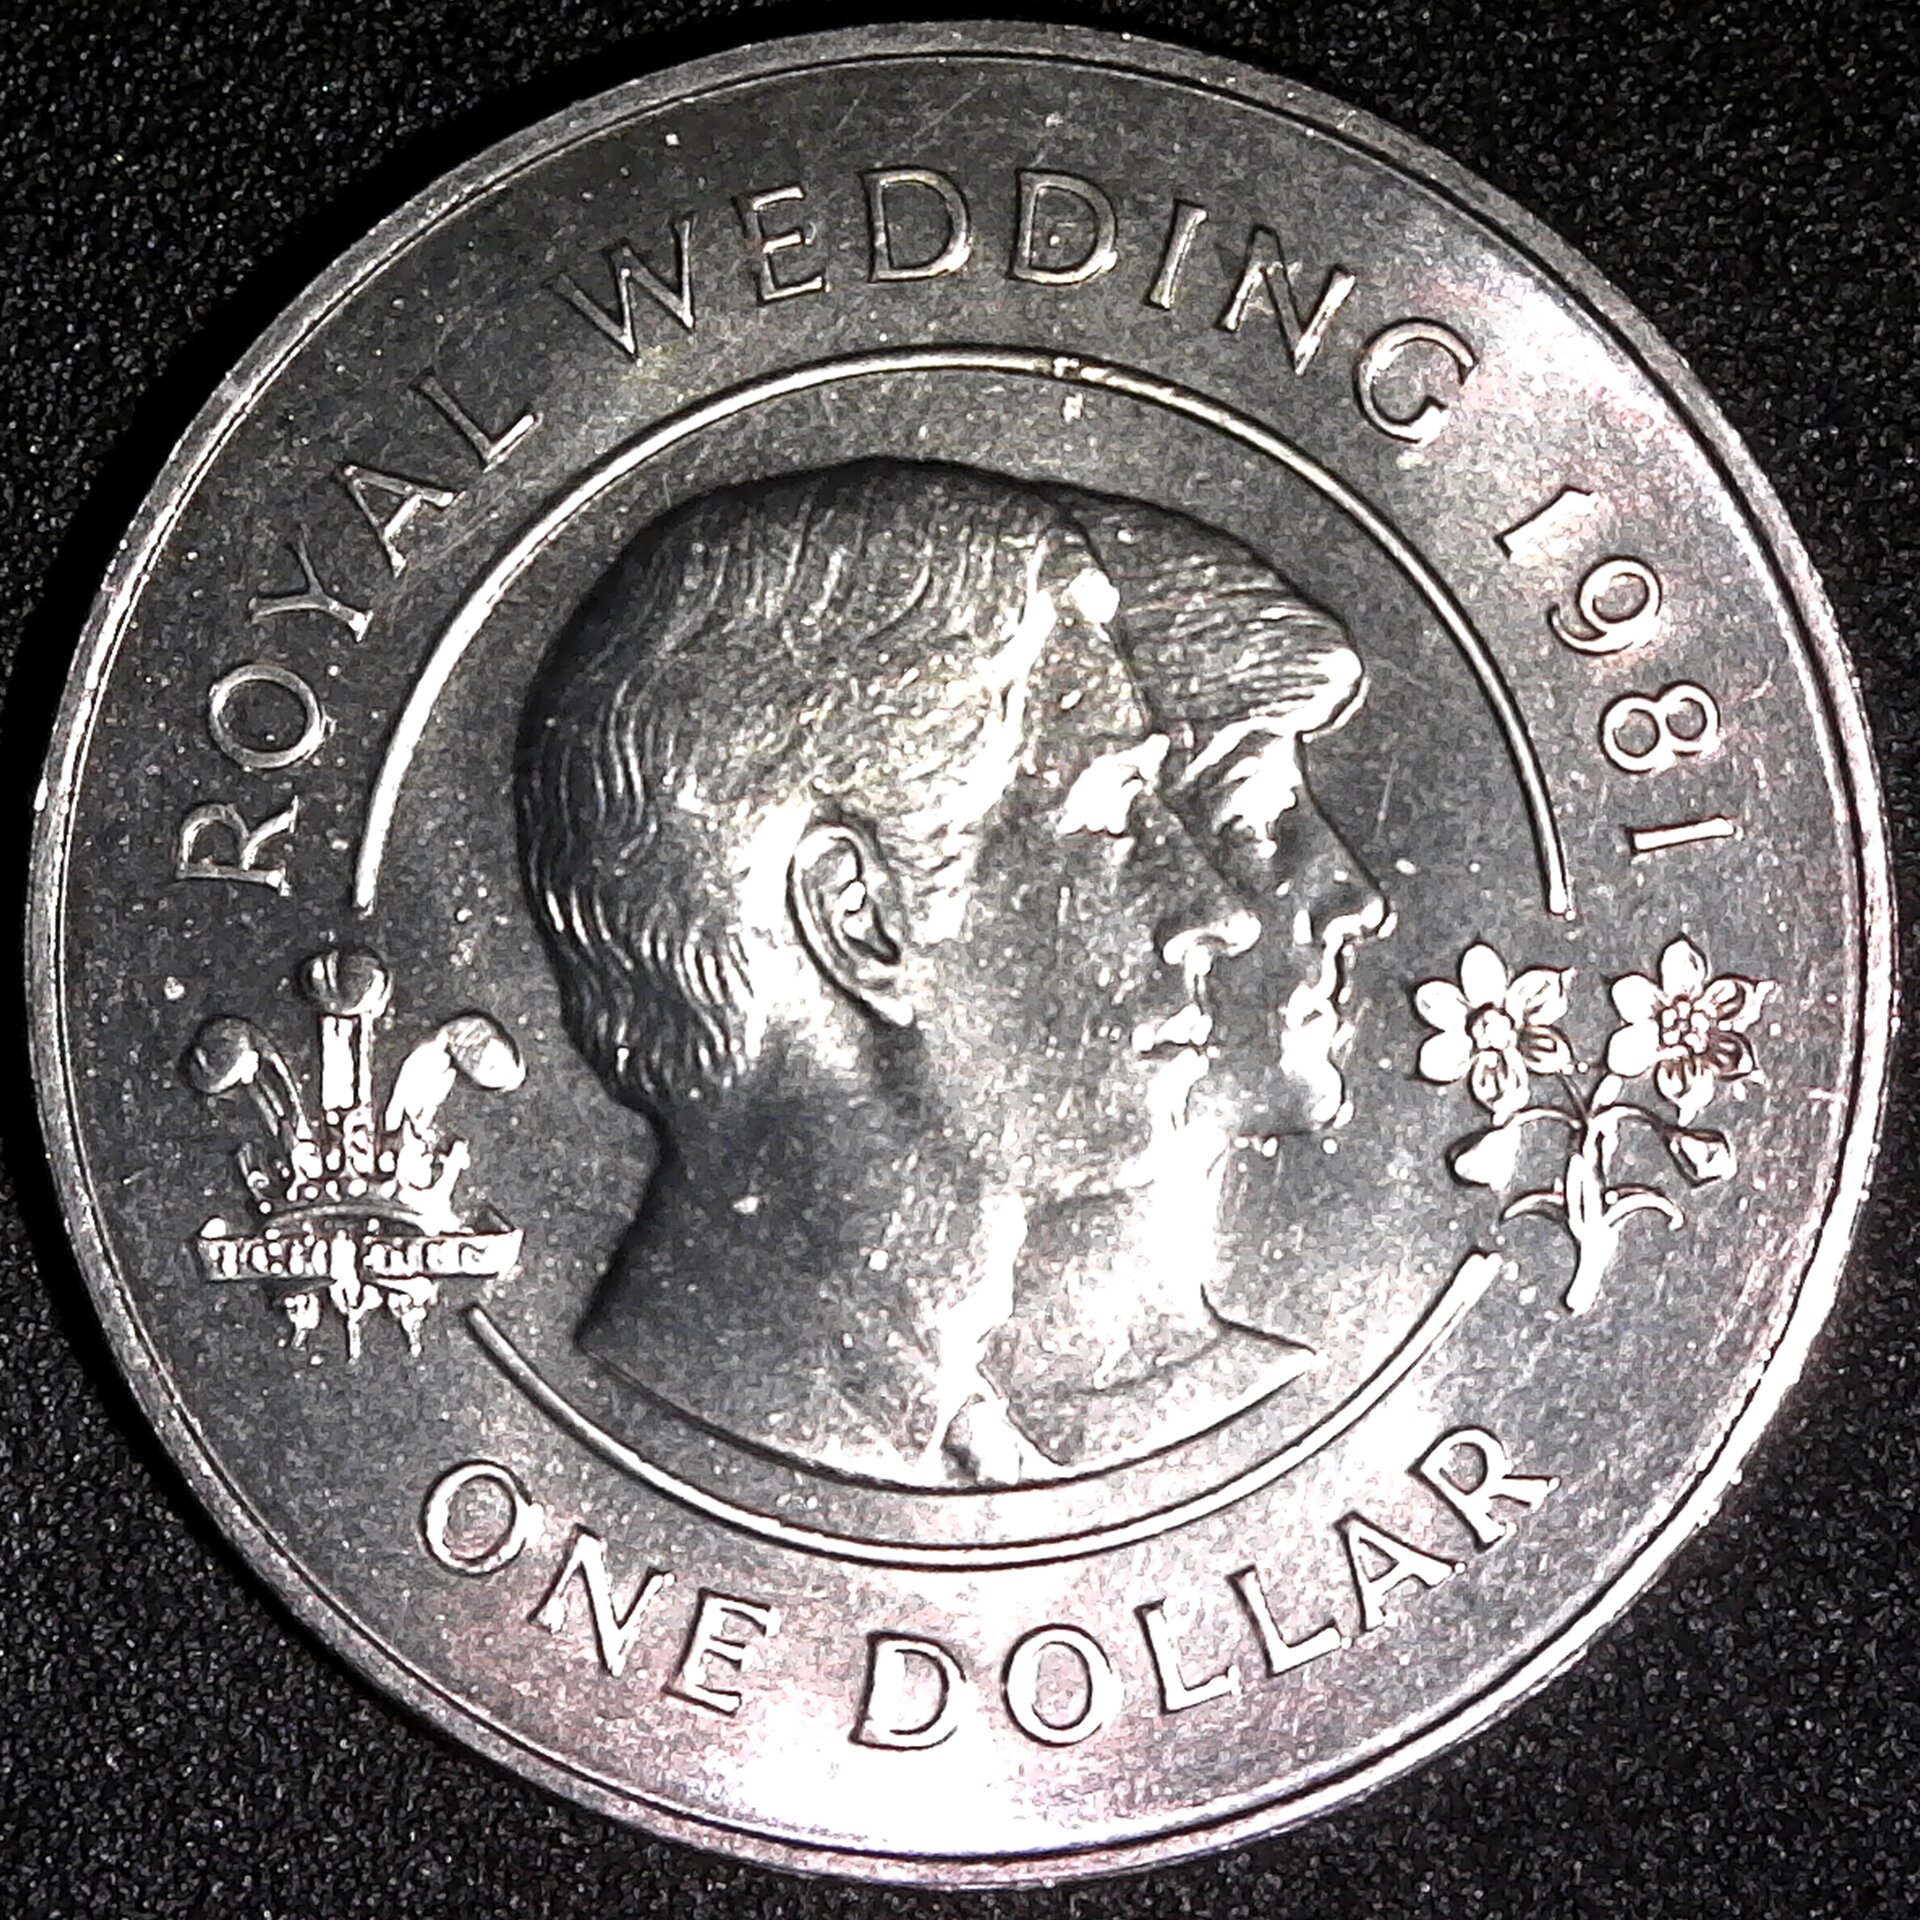 Bermuda One Dollar 1981 rev B.jpg